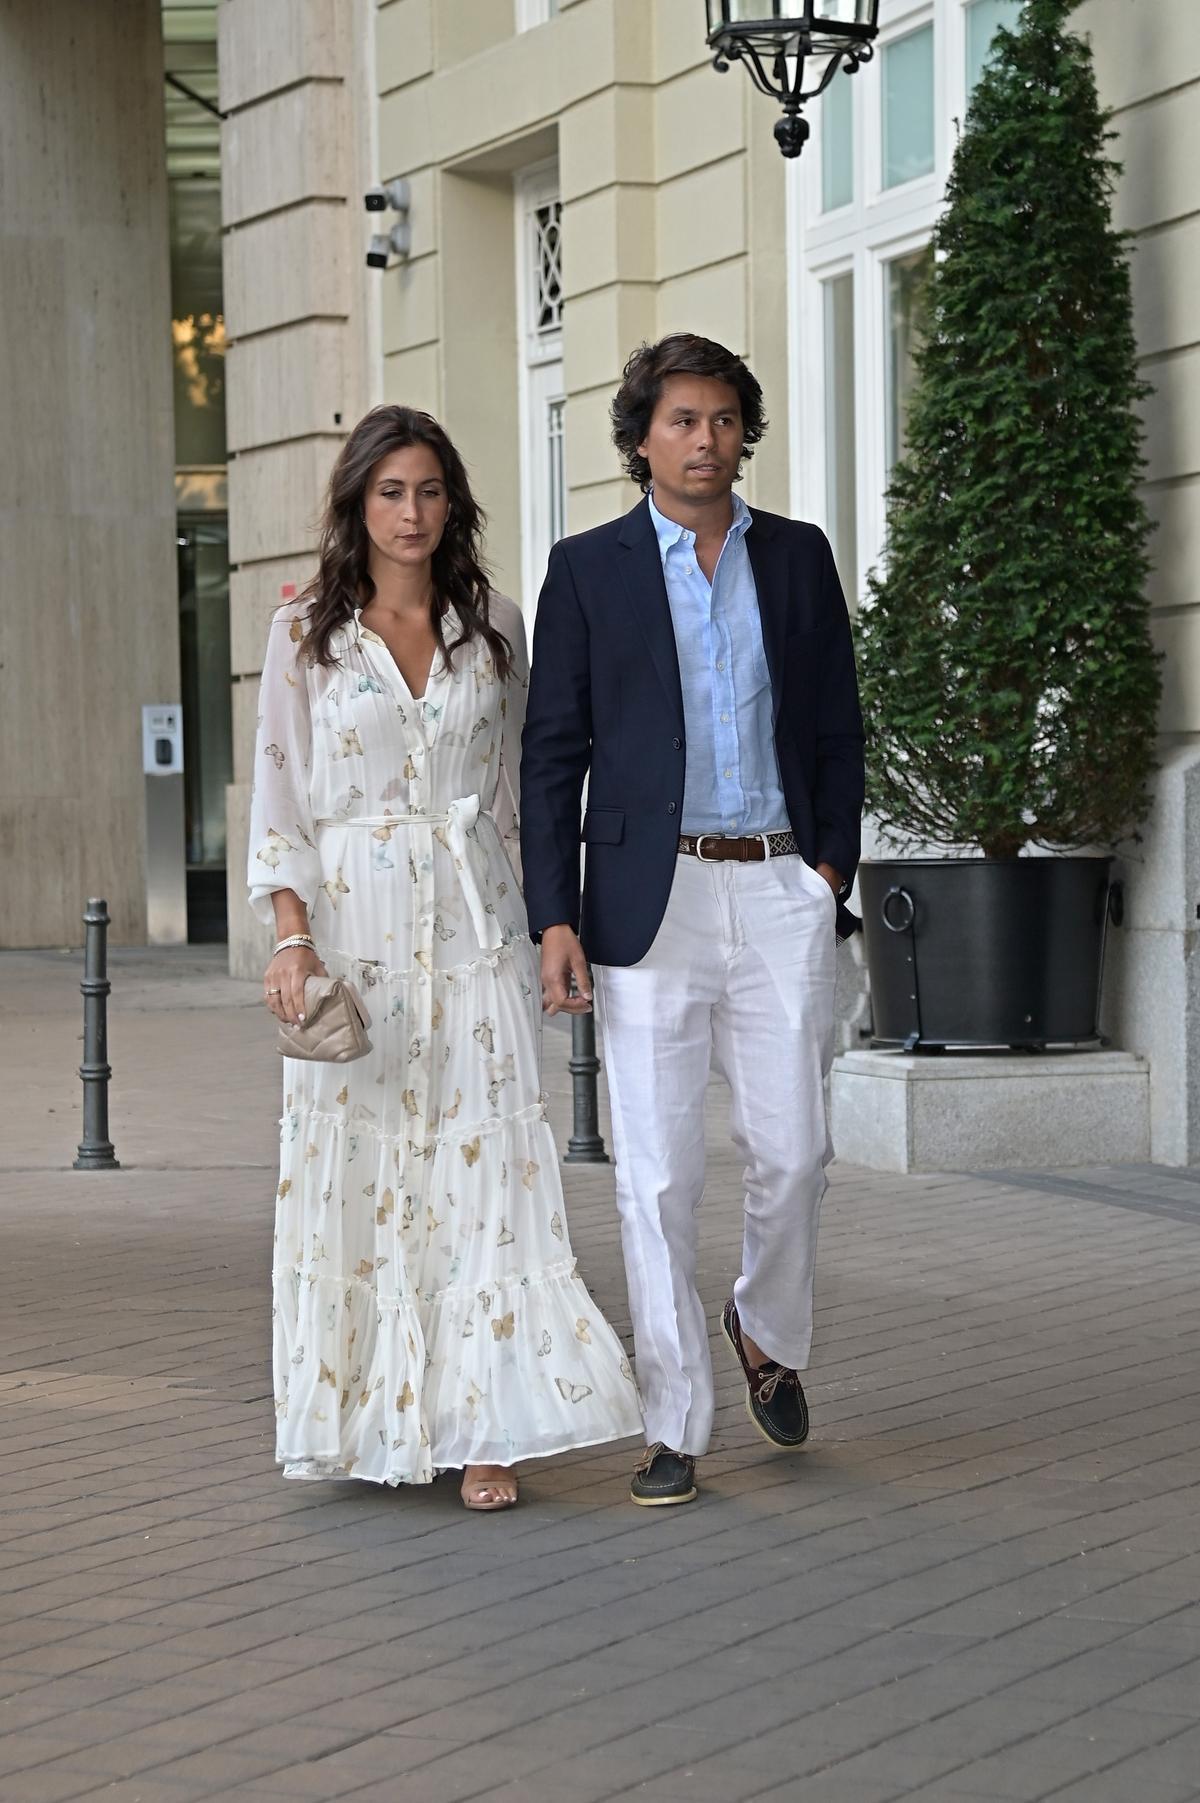 Fiesta preboda de Tamara Falcó e Íñigo Onieva en el Ritz de Madrid